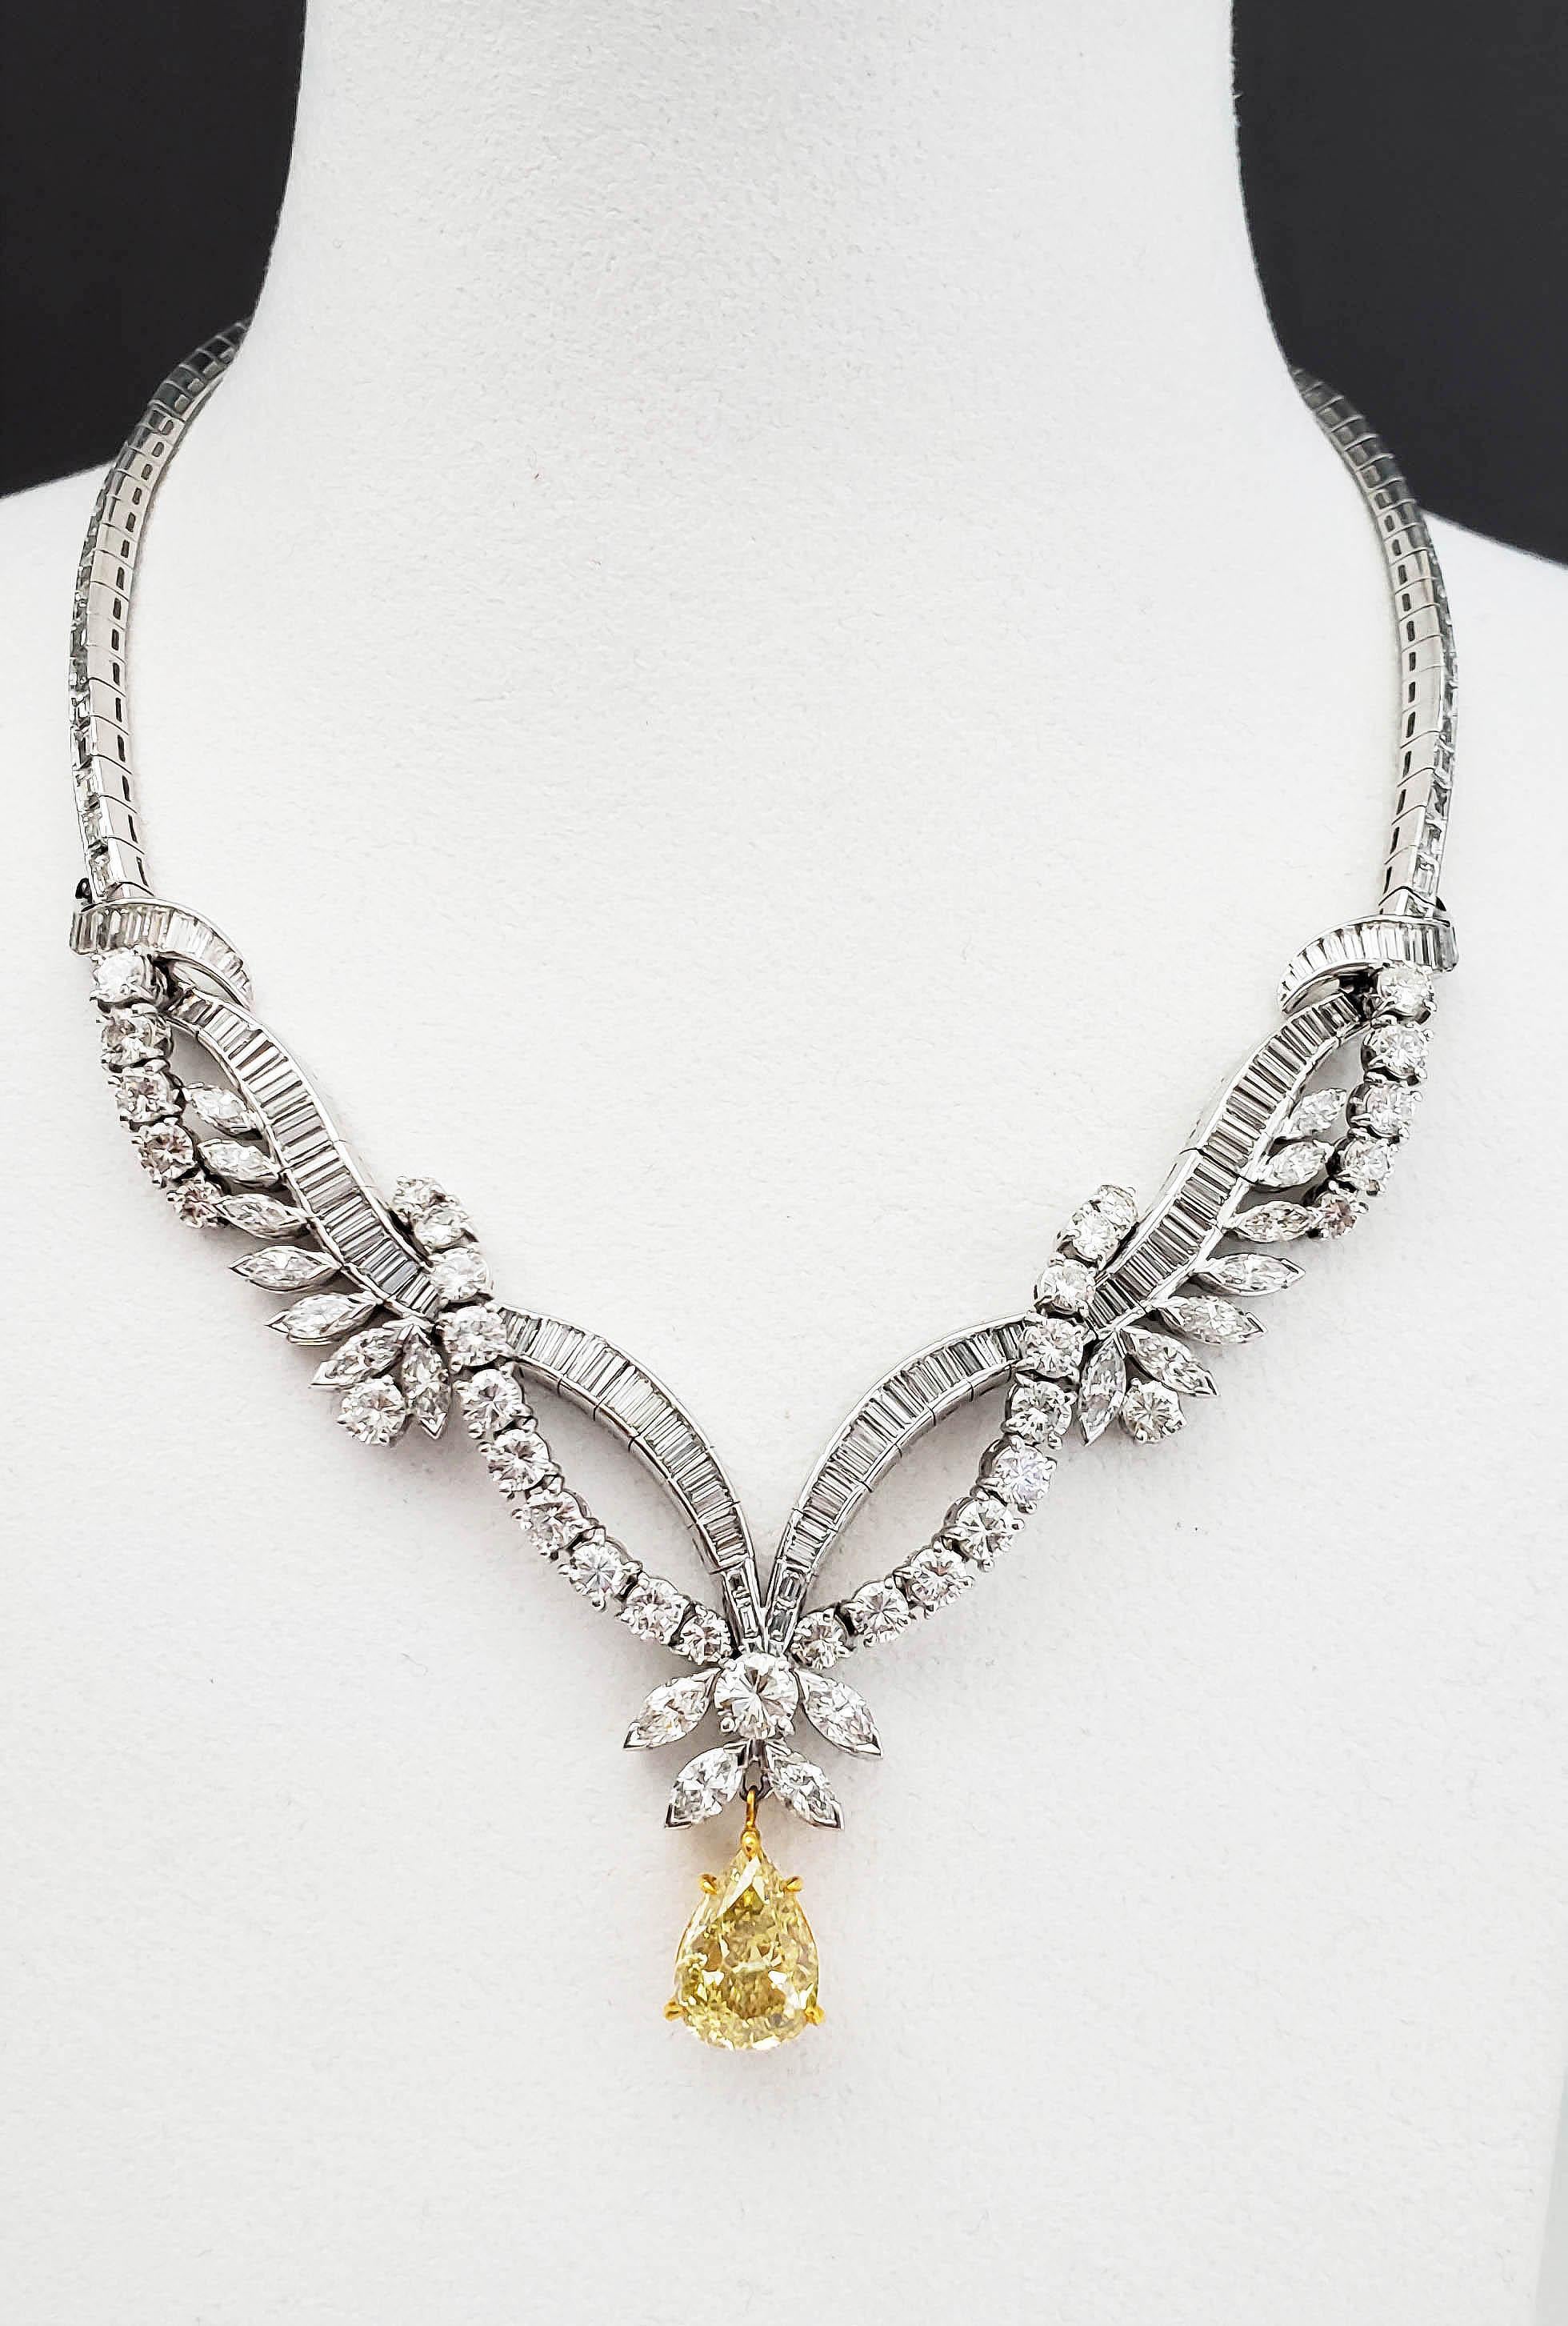 Scarselli Infinite Necklace 4.15 Carat Fancy Yellow Pear Shape Diamond, GIA 1